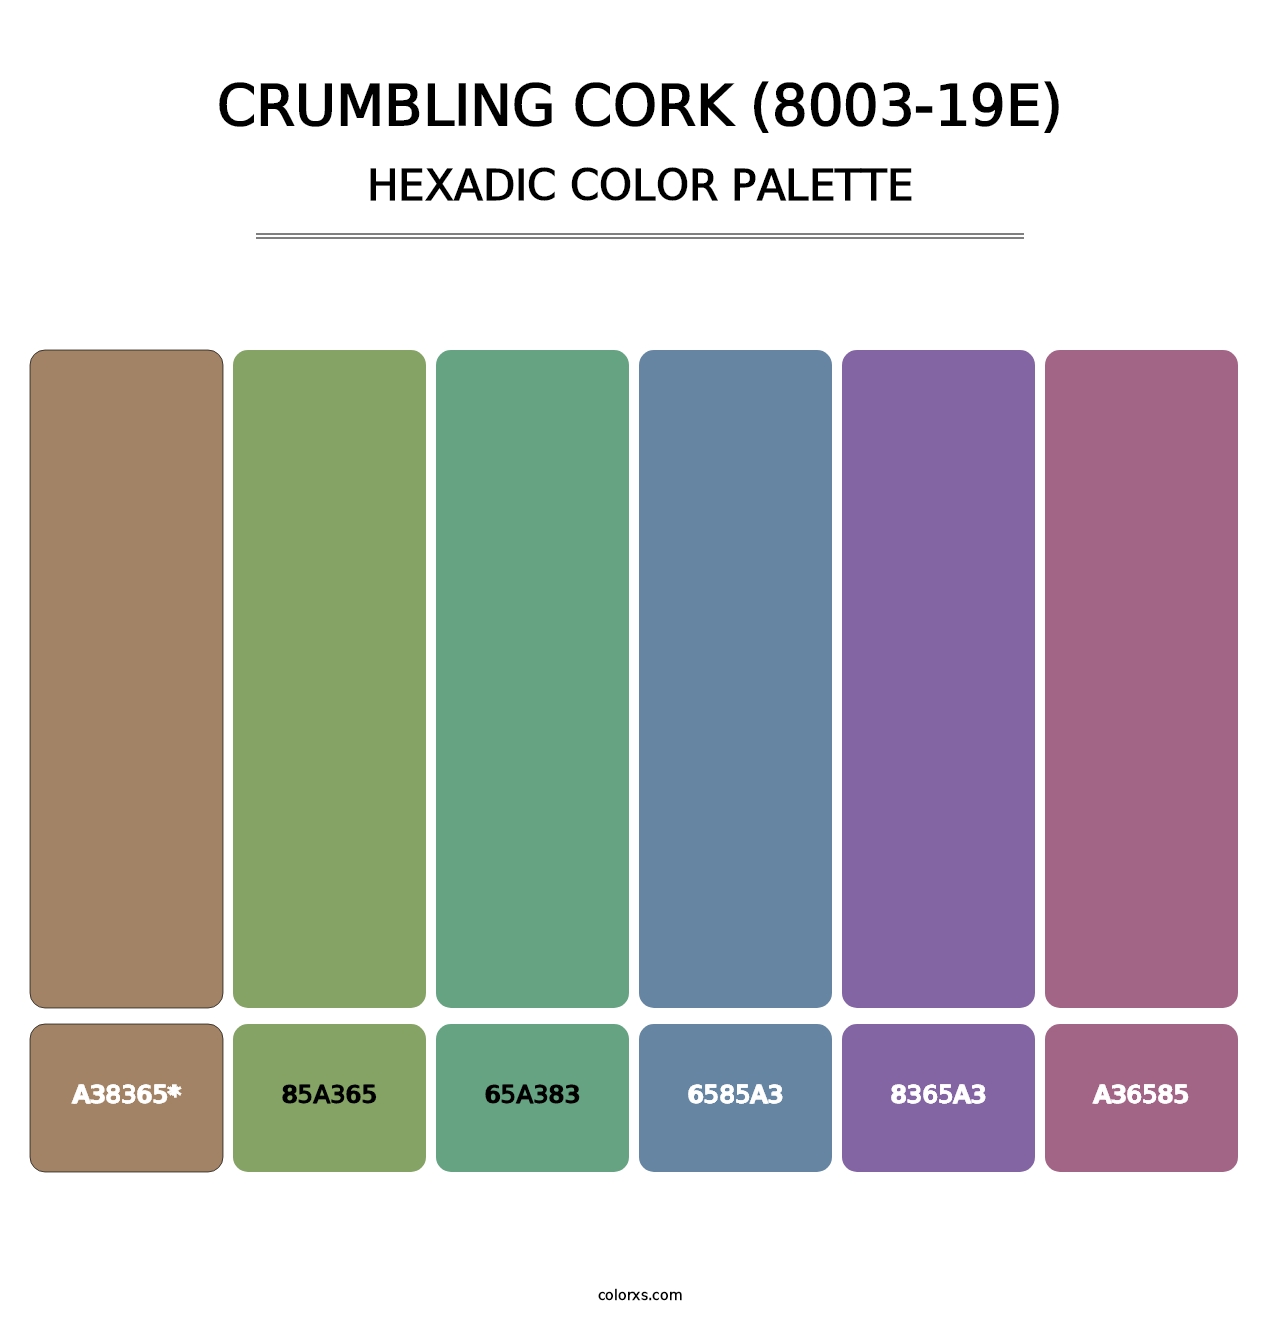 Crumbling Cork (8003-19E) - Hexadic Color Palette